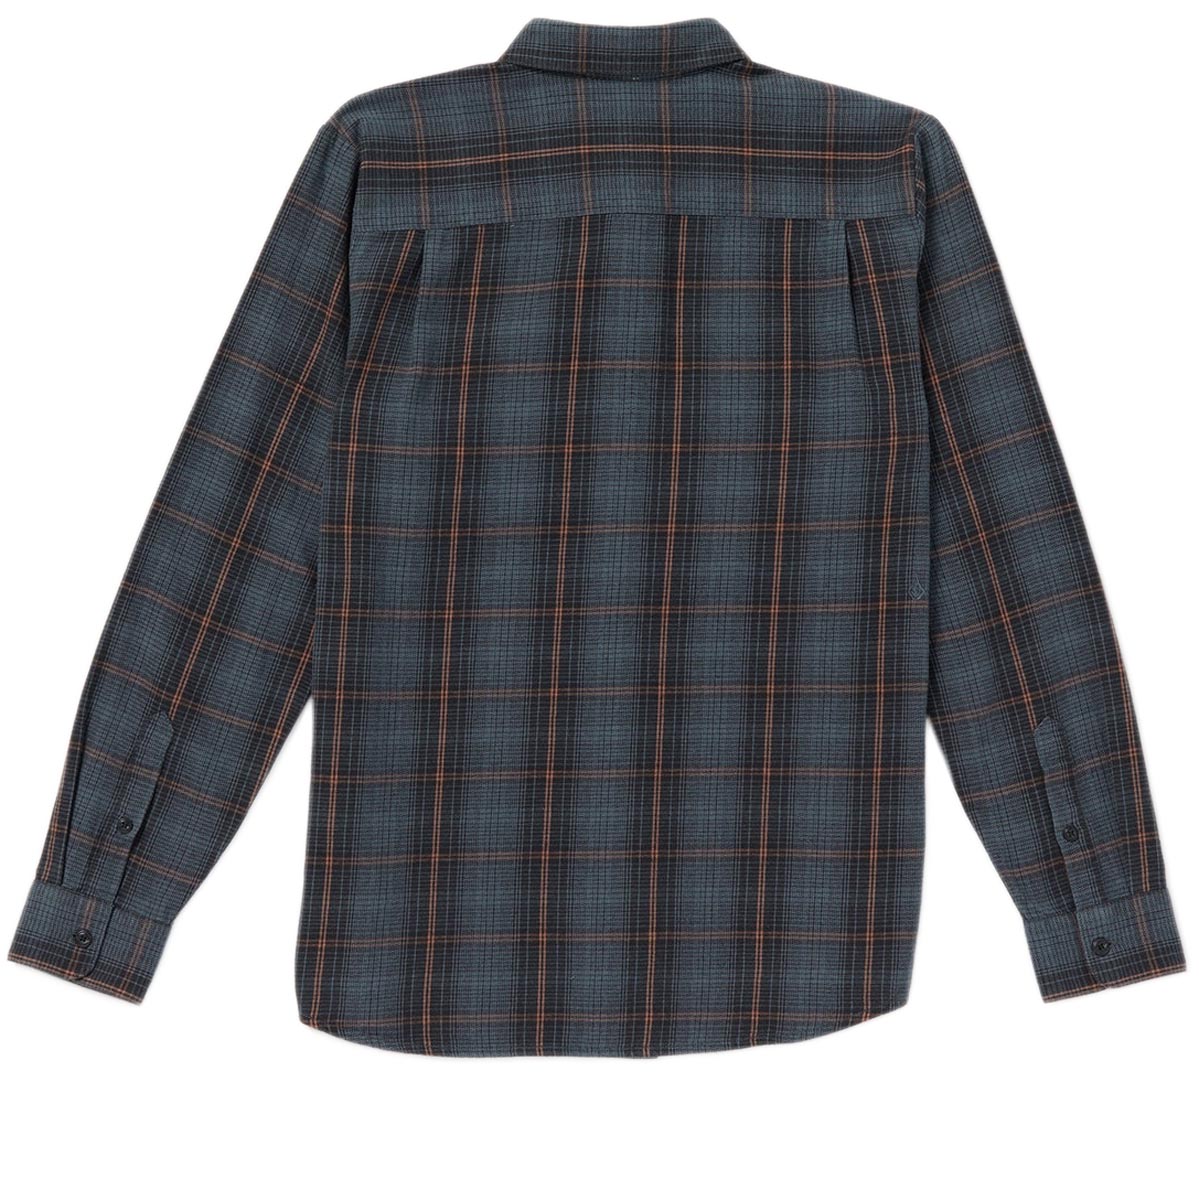 Volcom Heavy Twills Flannel Long Sleeve Shirt - Dark Slate image 2